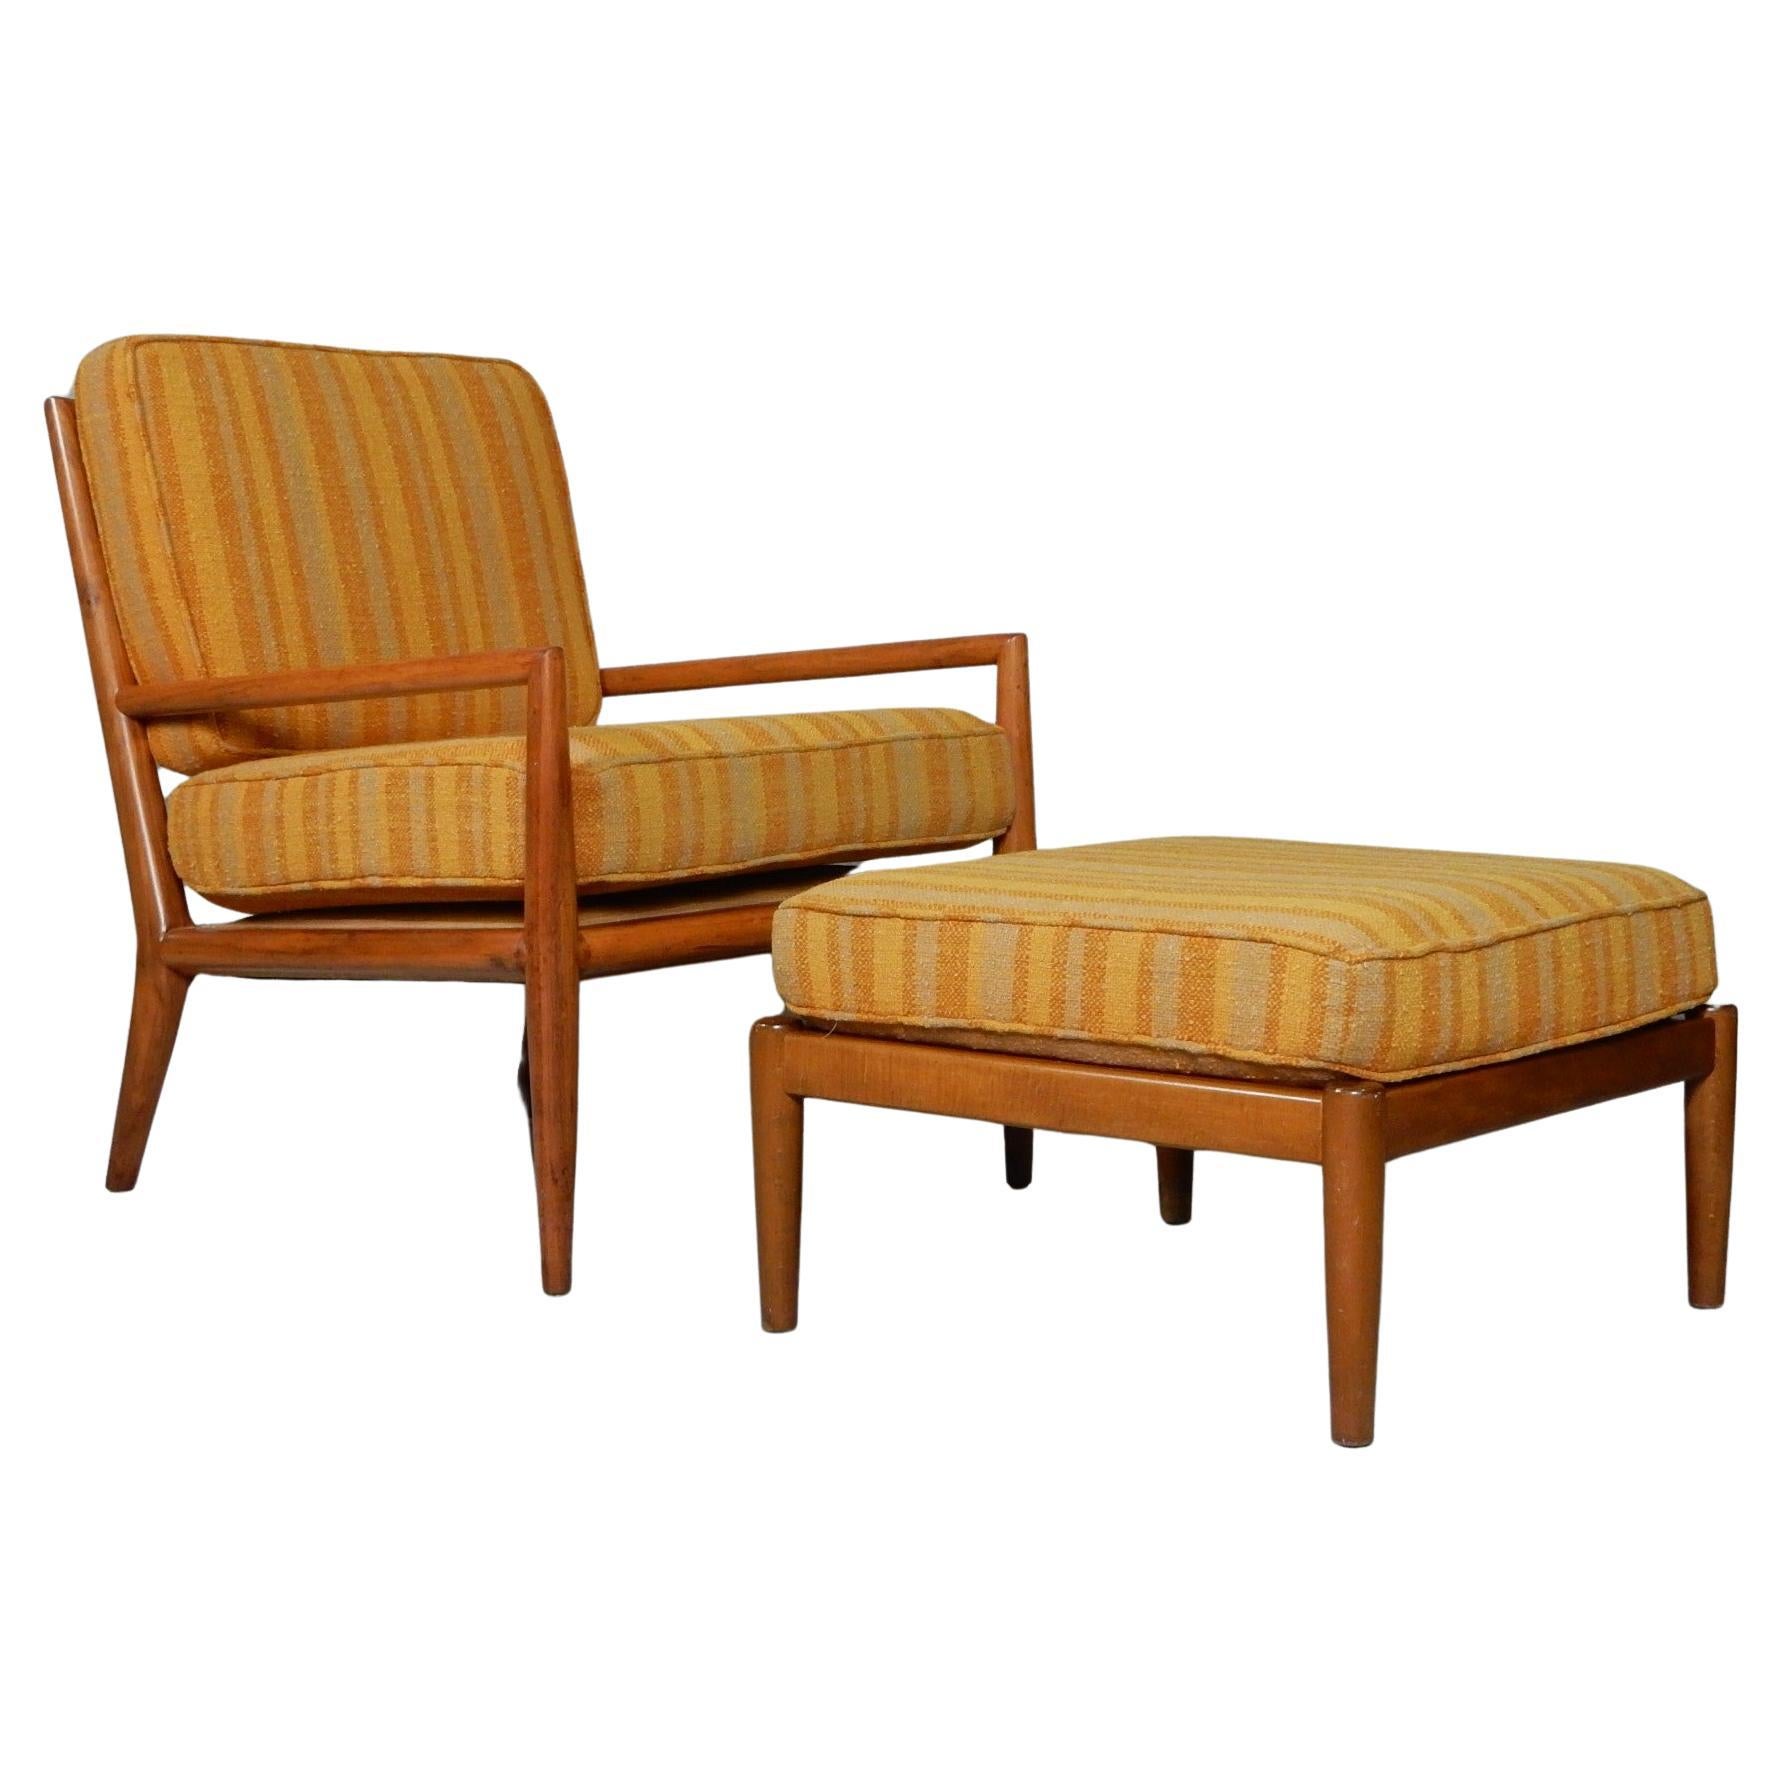 20th Century T.H. Robsjohn-Gibbings Lounge Chair & Ottoman by Widdicomb 1950's For Sale